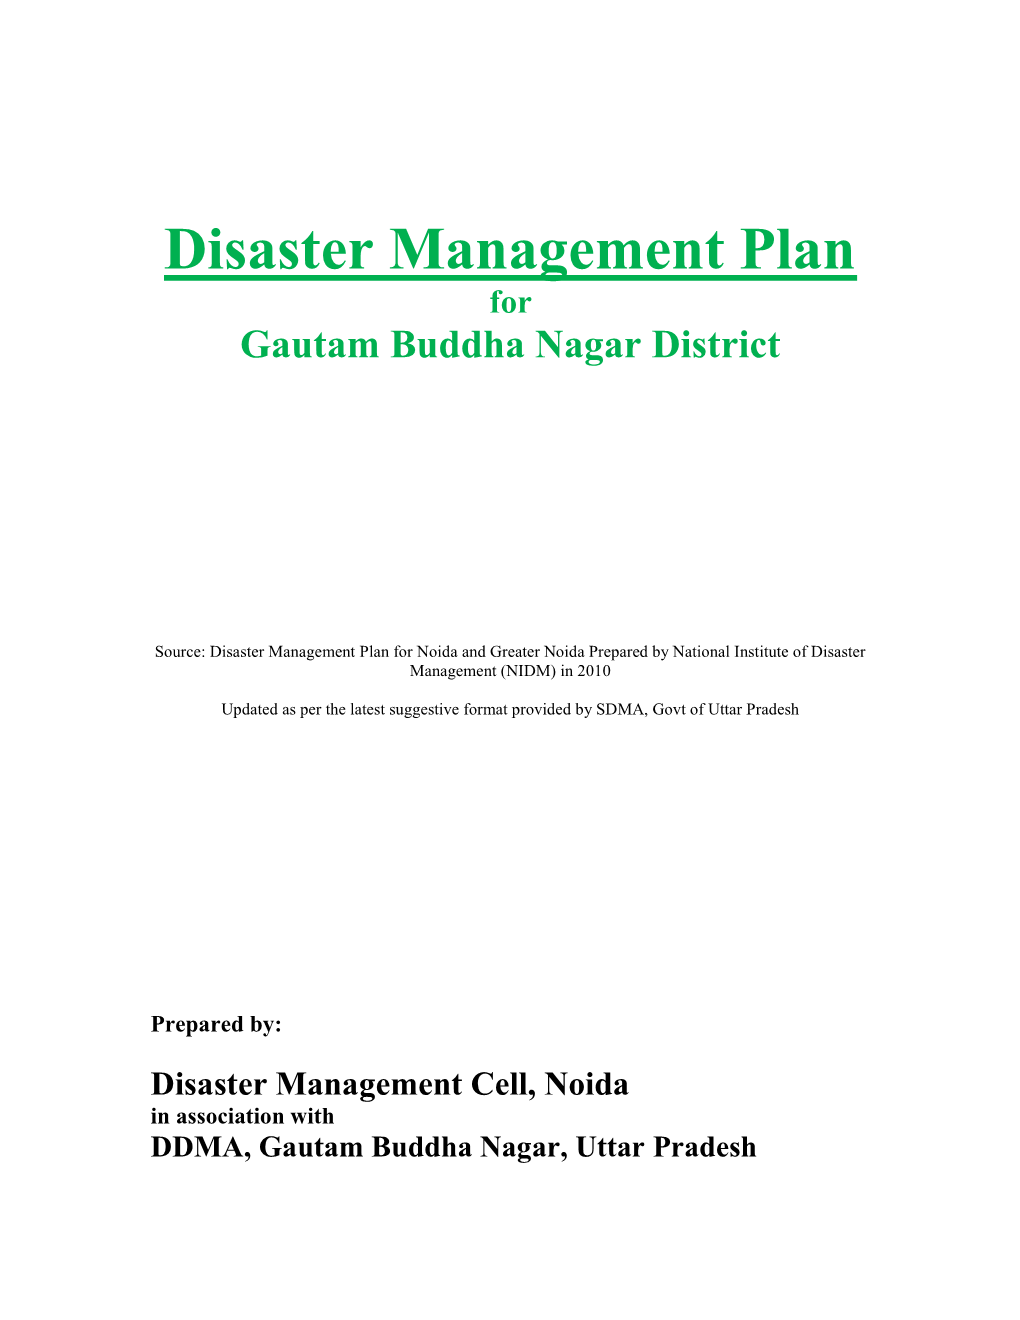 Disaster Management Plan for Gautam Buddha Nagar District